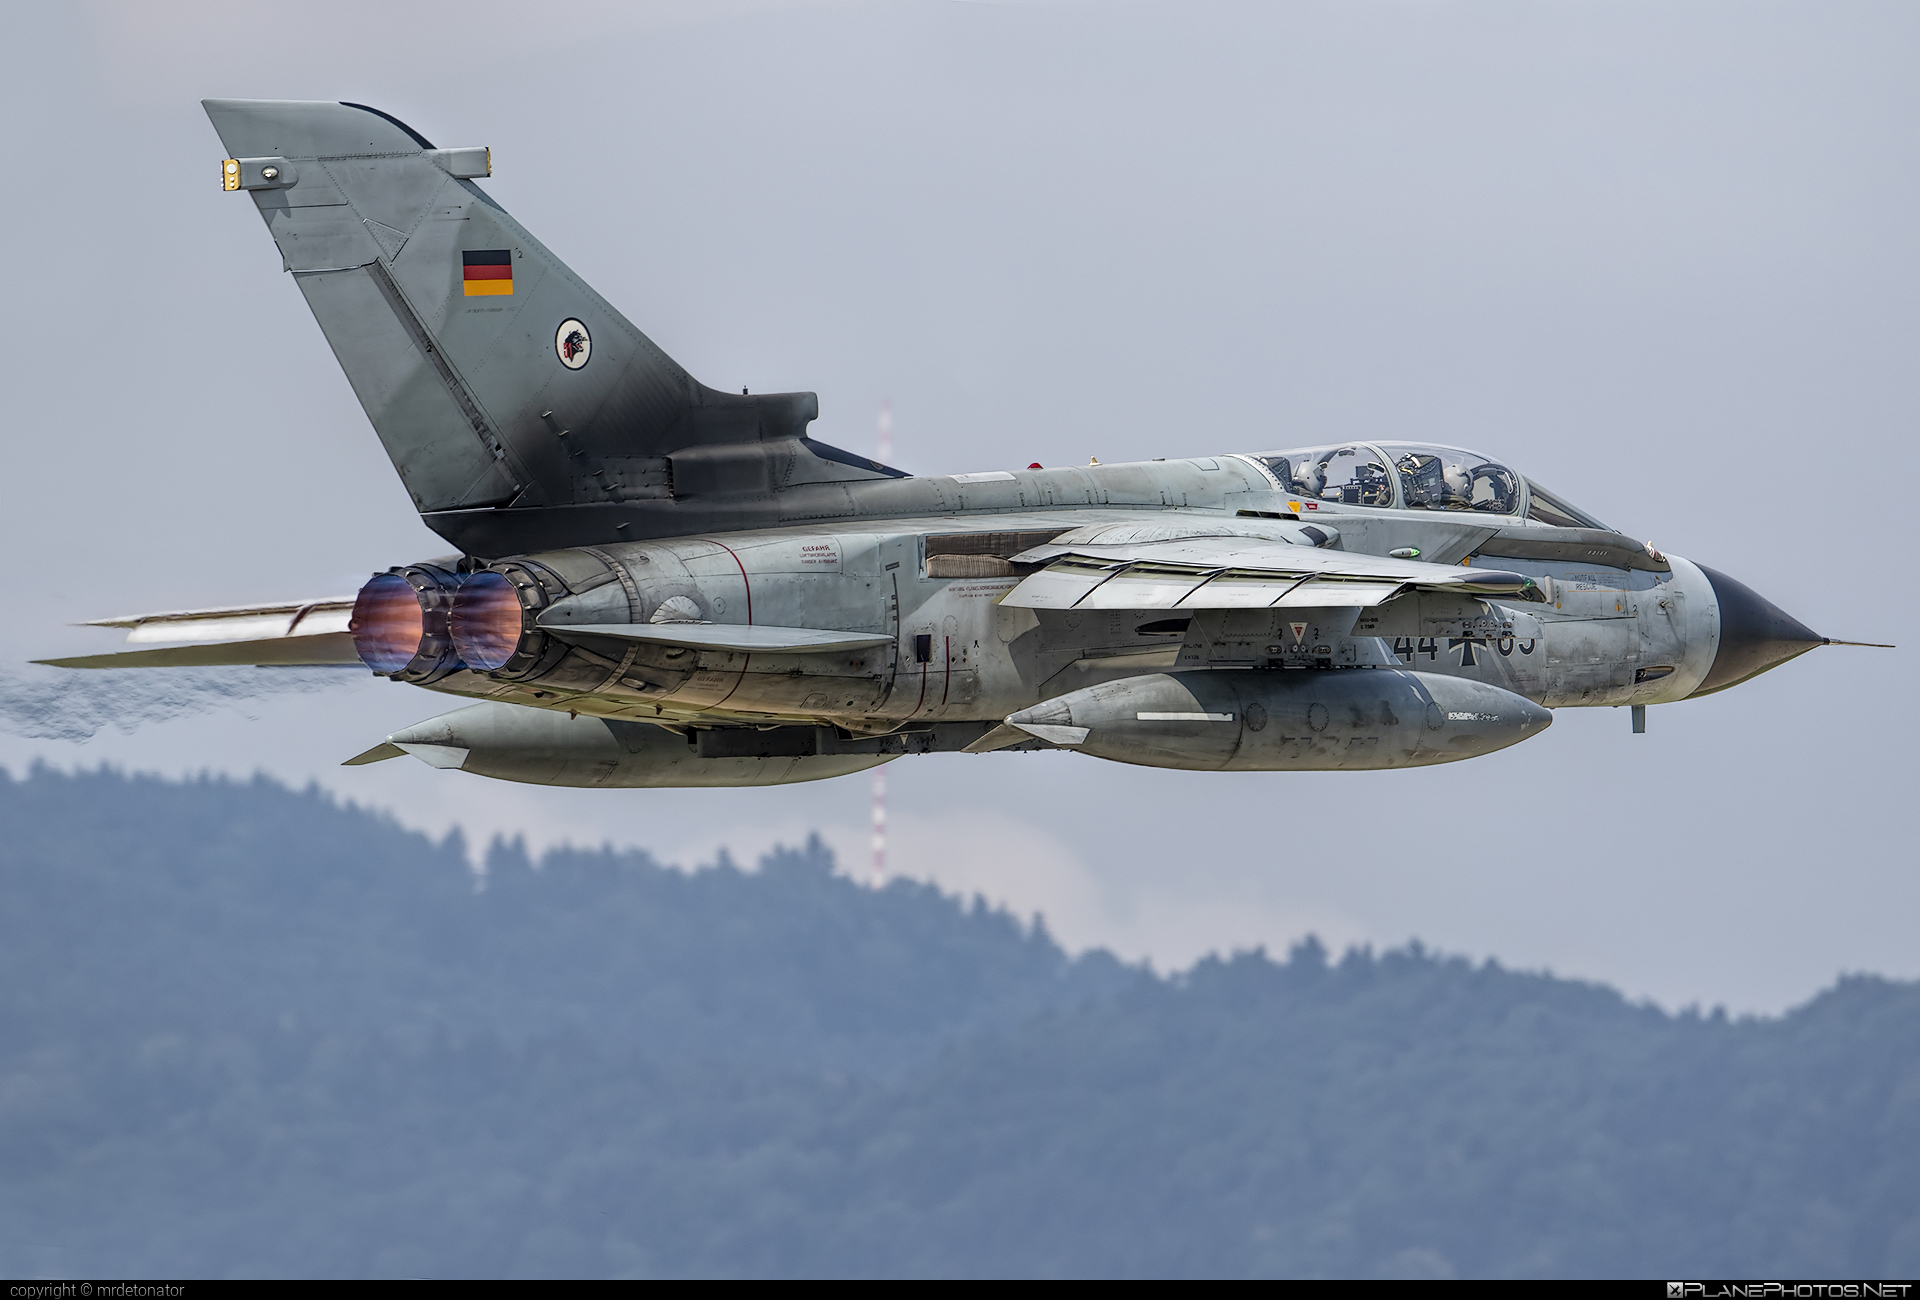 Panavia Tornado IDS - 44+65 operated by Luftwaffe (German Air Force) #GermanAirForce #luftwaffe #panavia #panaviatornado #siaf2018 #tornadoids